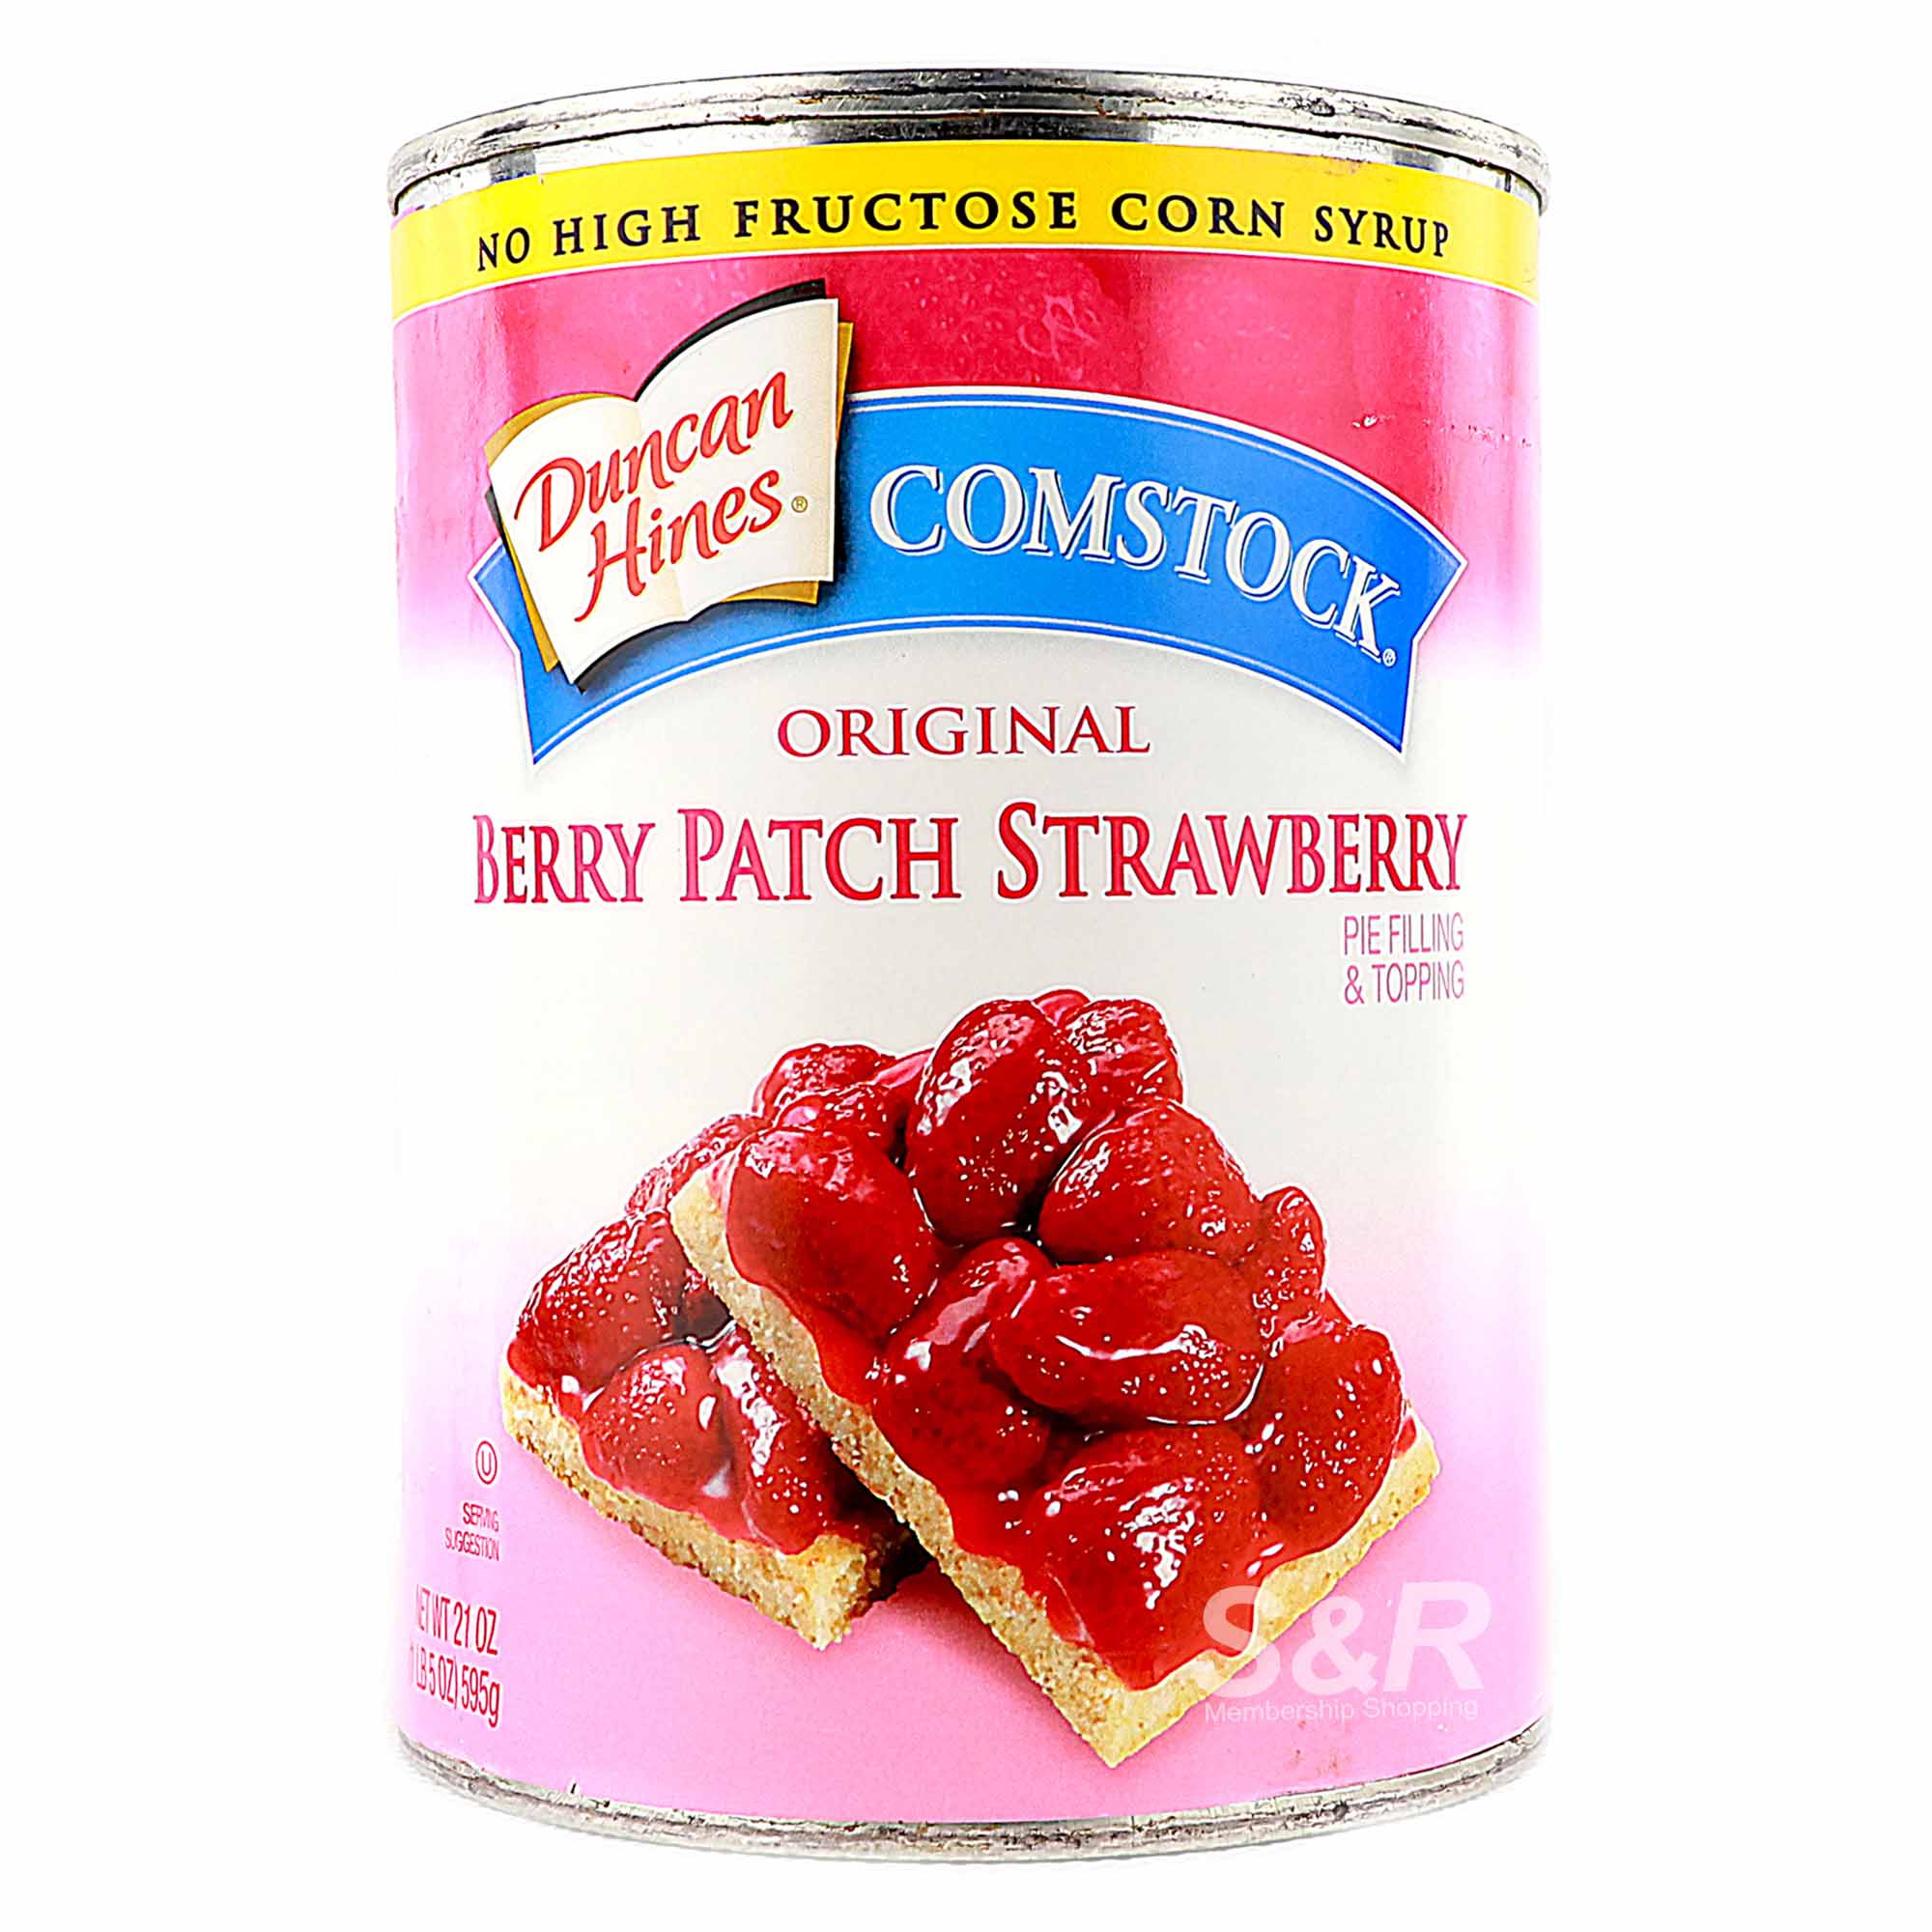 Duncan Hines Comstock Original Berry Patch Strawberry 595g